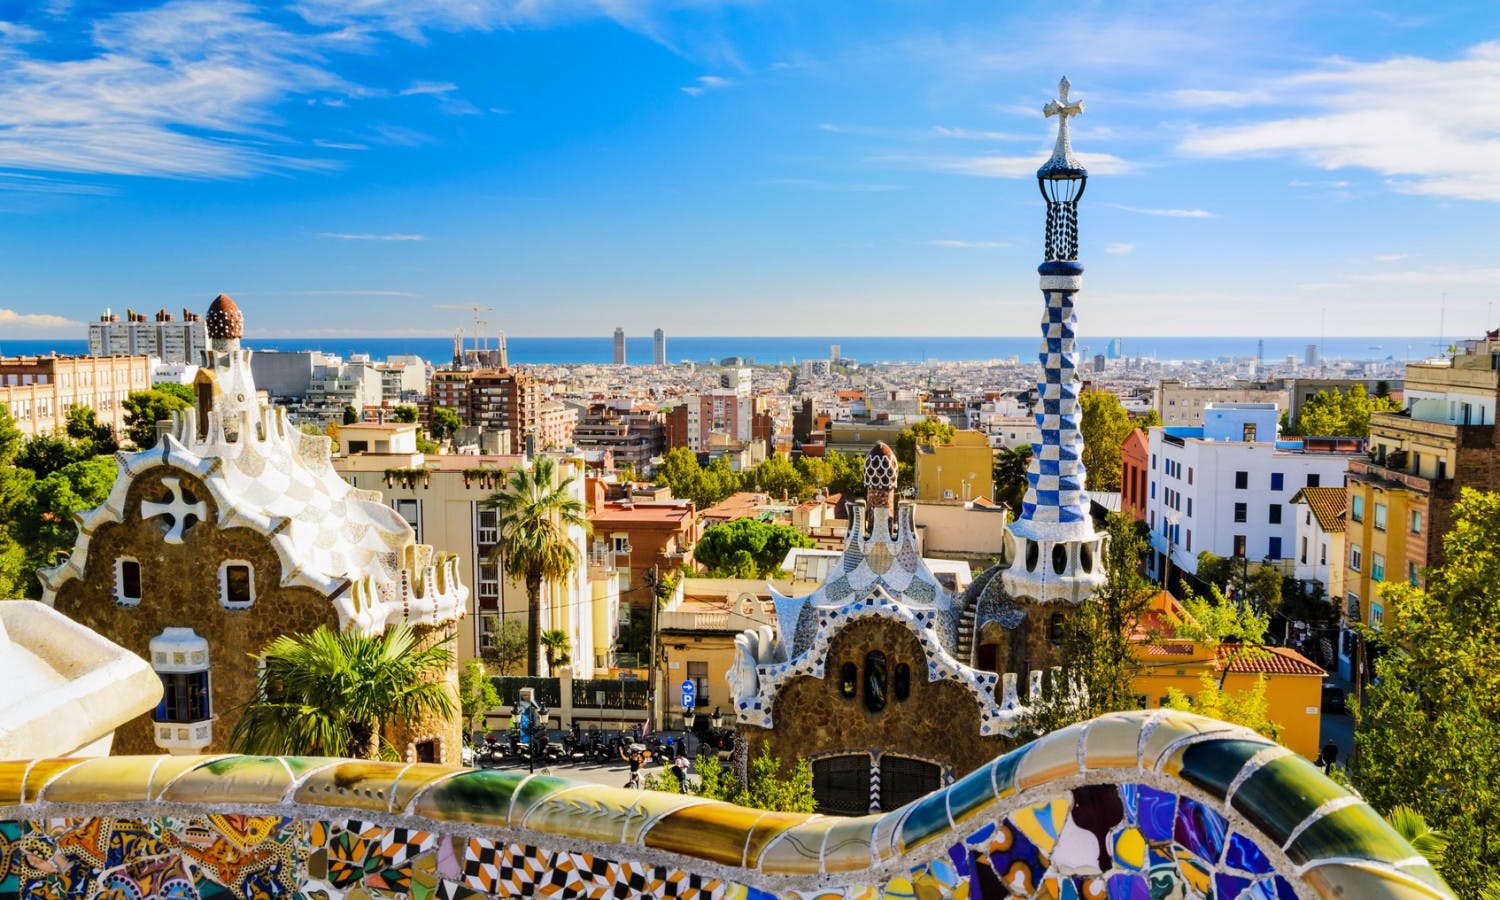 Barcelona Gaudí: Artistic Barcelona Tour with Entrance to Sagrada Familia and Park Güell-7